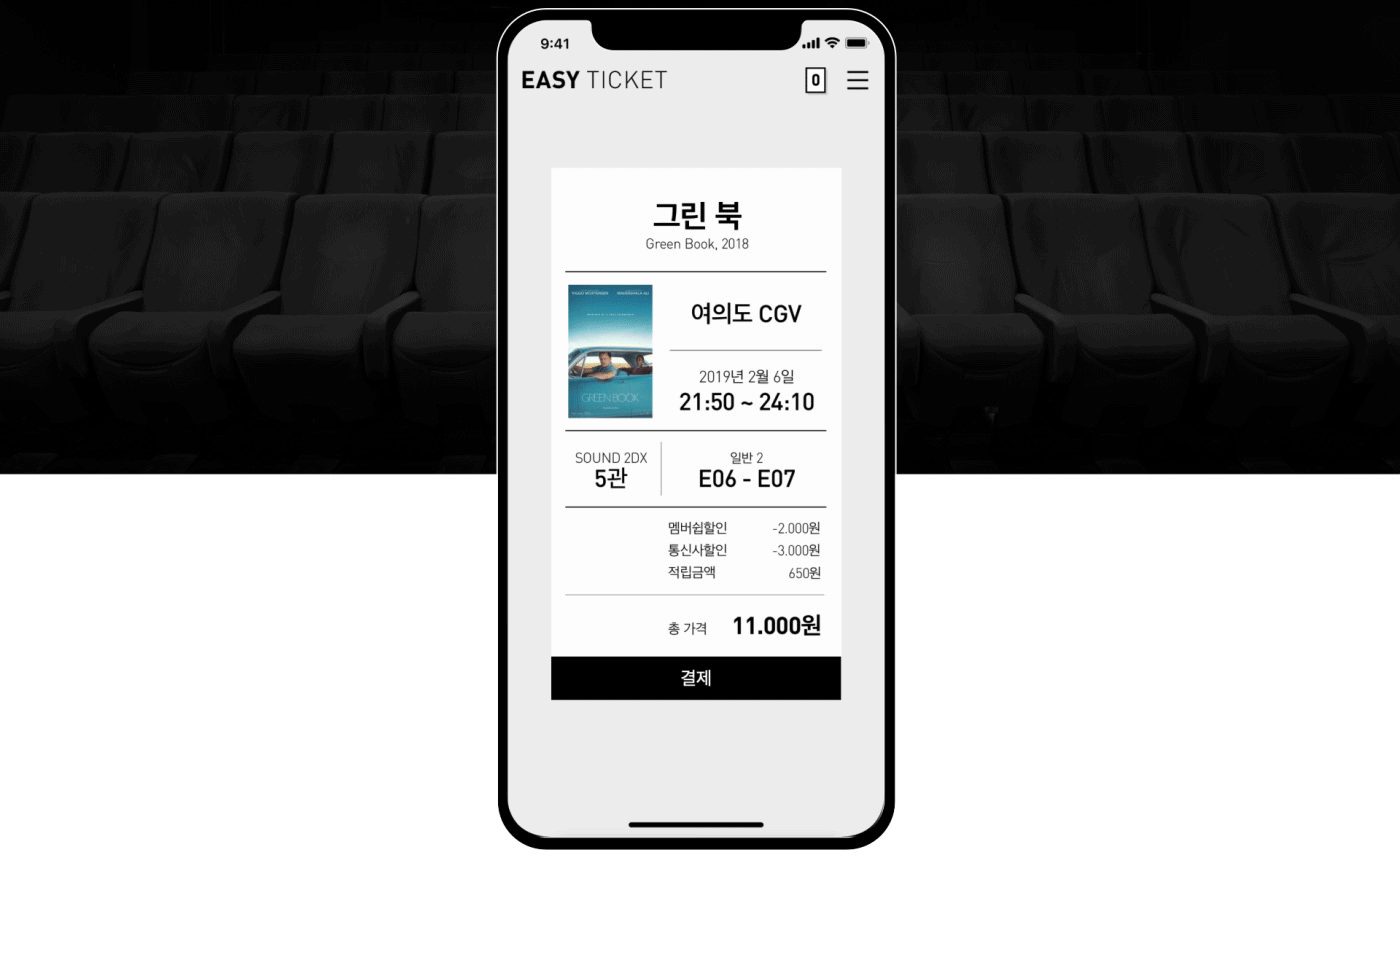 interaction Cinema ticket UI ProtoPie app mobile motion payment movie